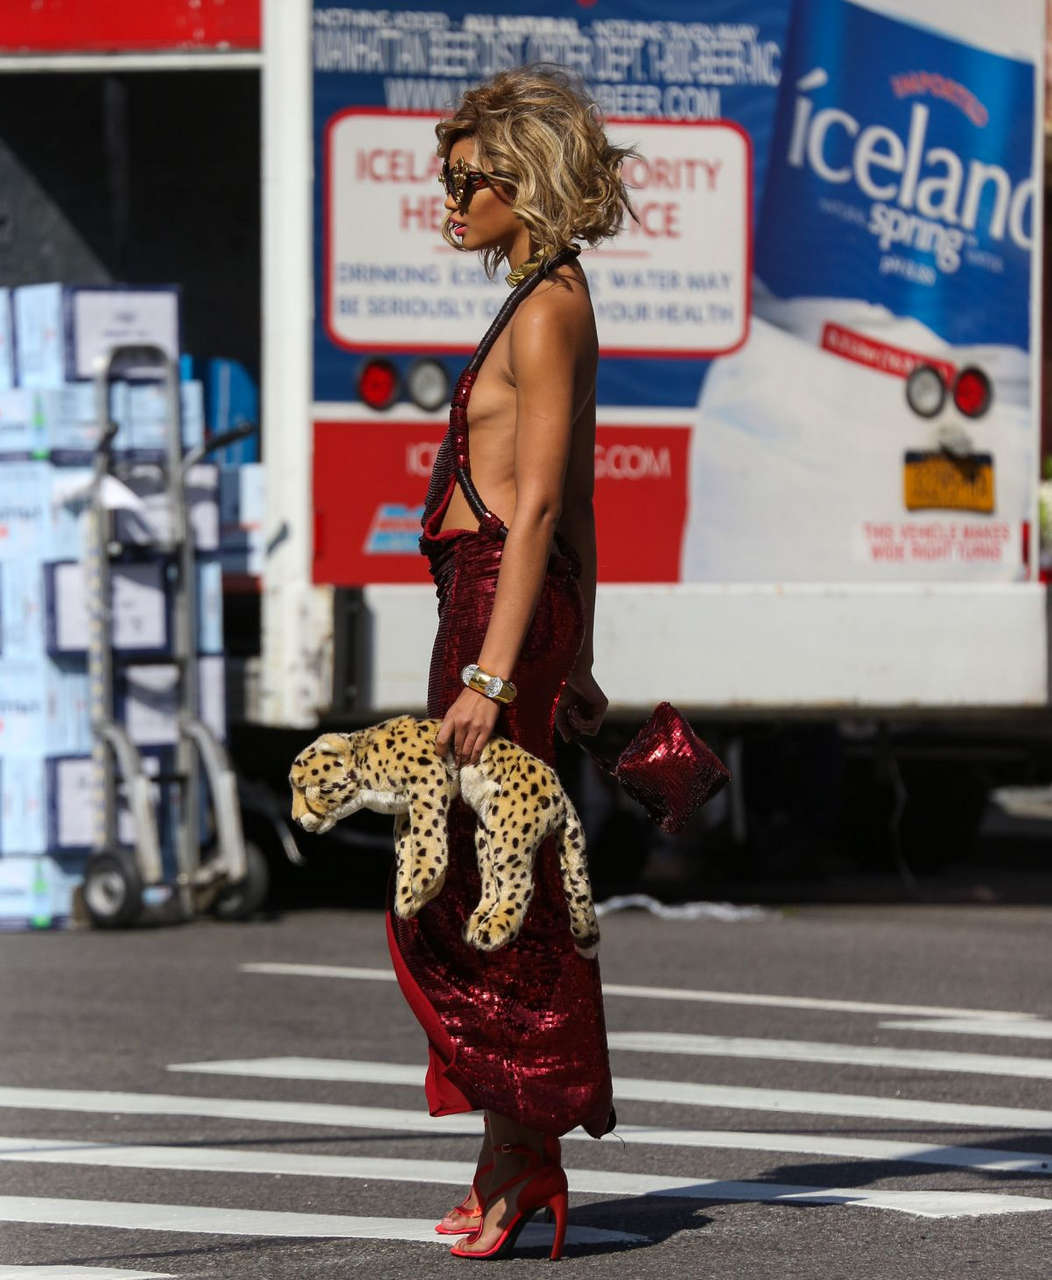 Chanel Iman Photoshoot Street New York